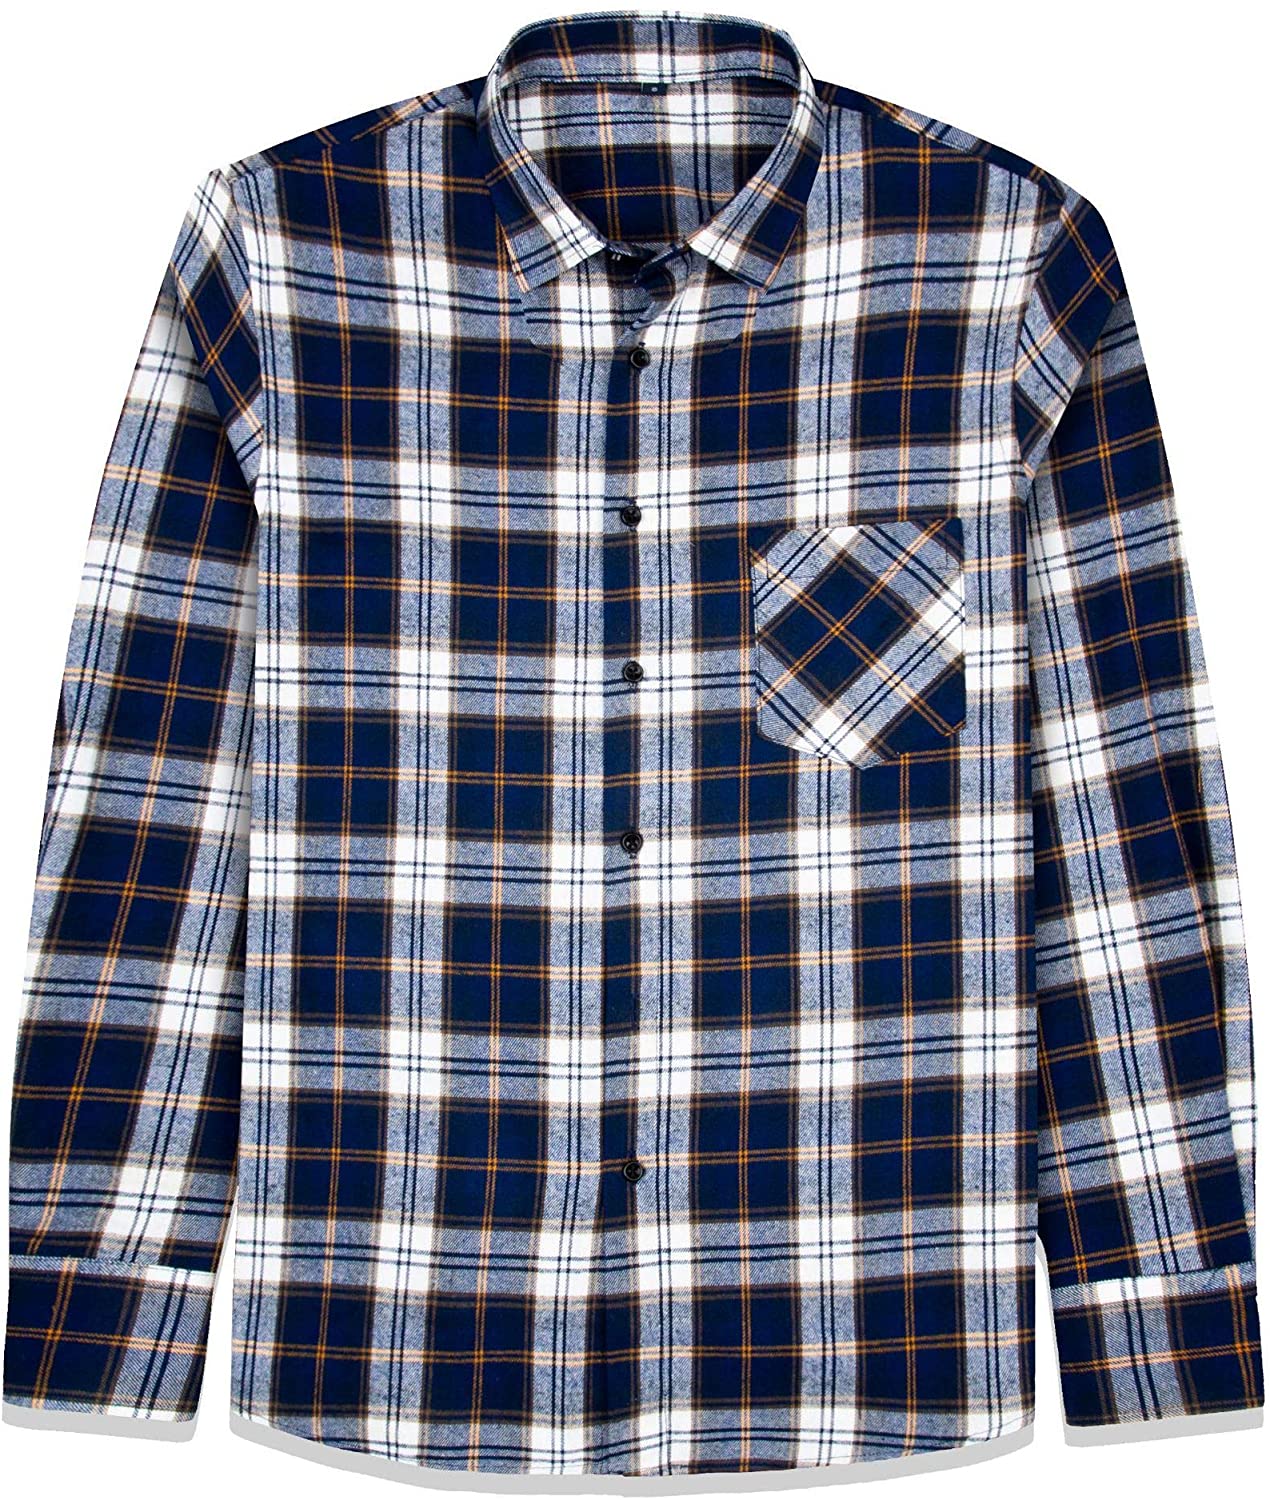 J.VER Men's Flannel Plaid Shirts Long Sleeve Regular Fit Casual Button Down Shirt